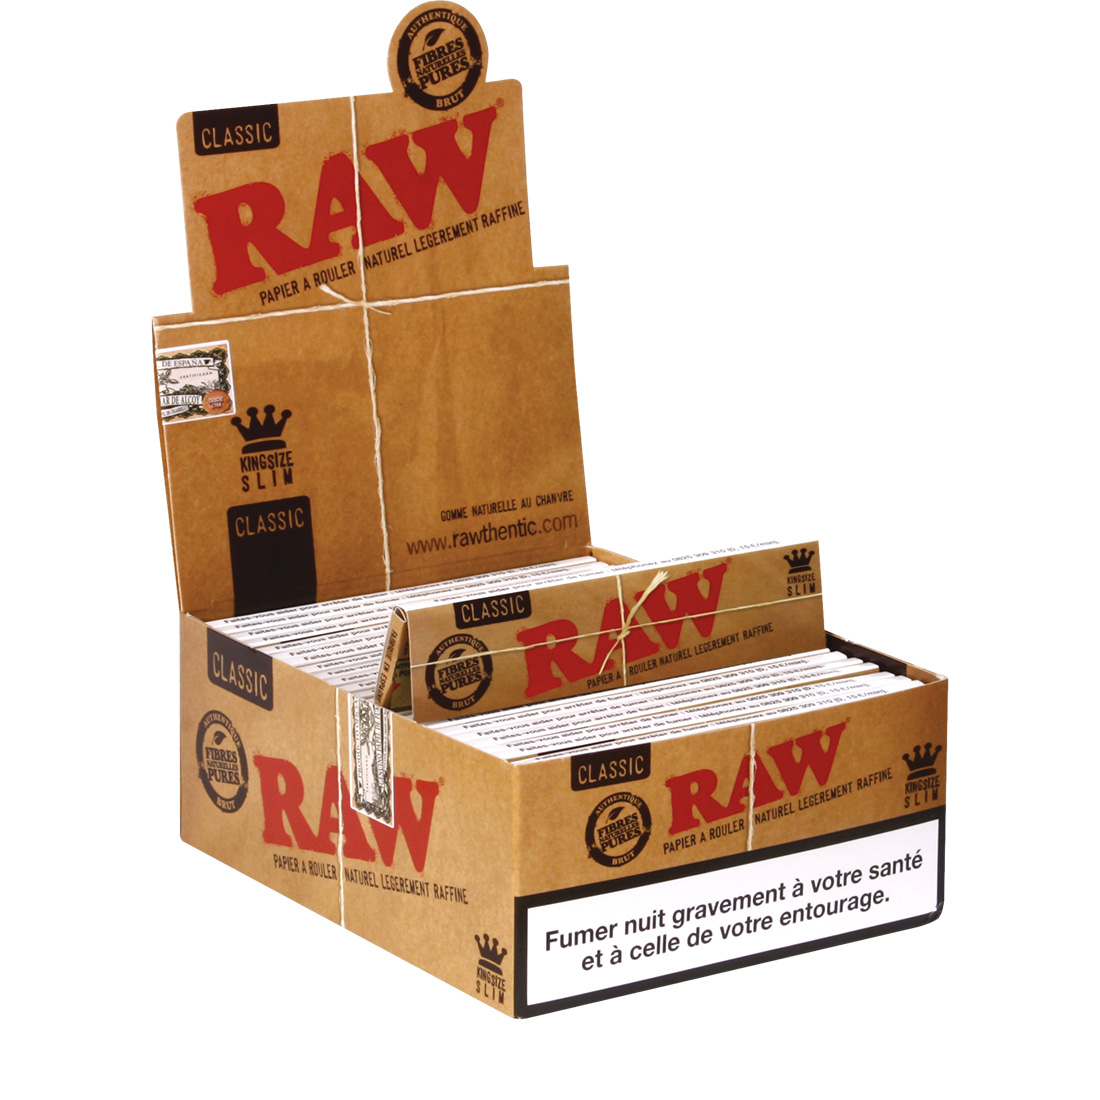 Feuille a rouler Raw Artesano Slim et Tips x 1 - 2,90€